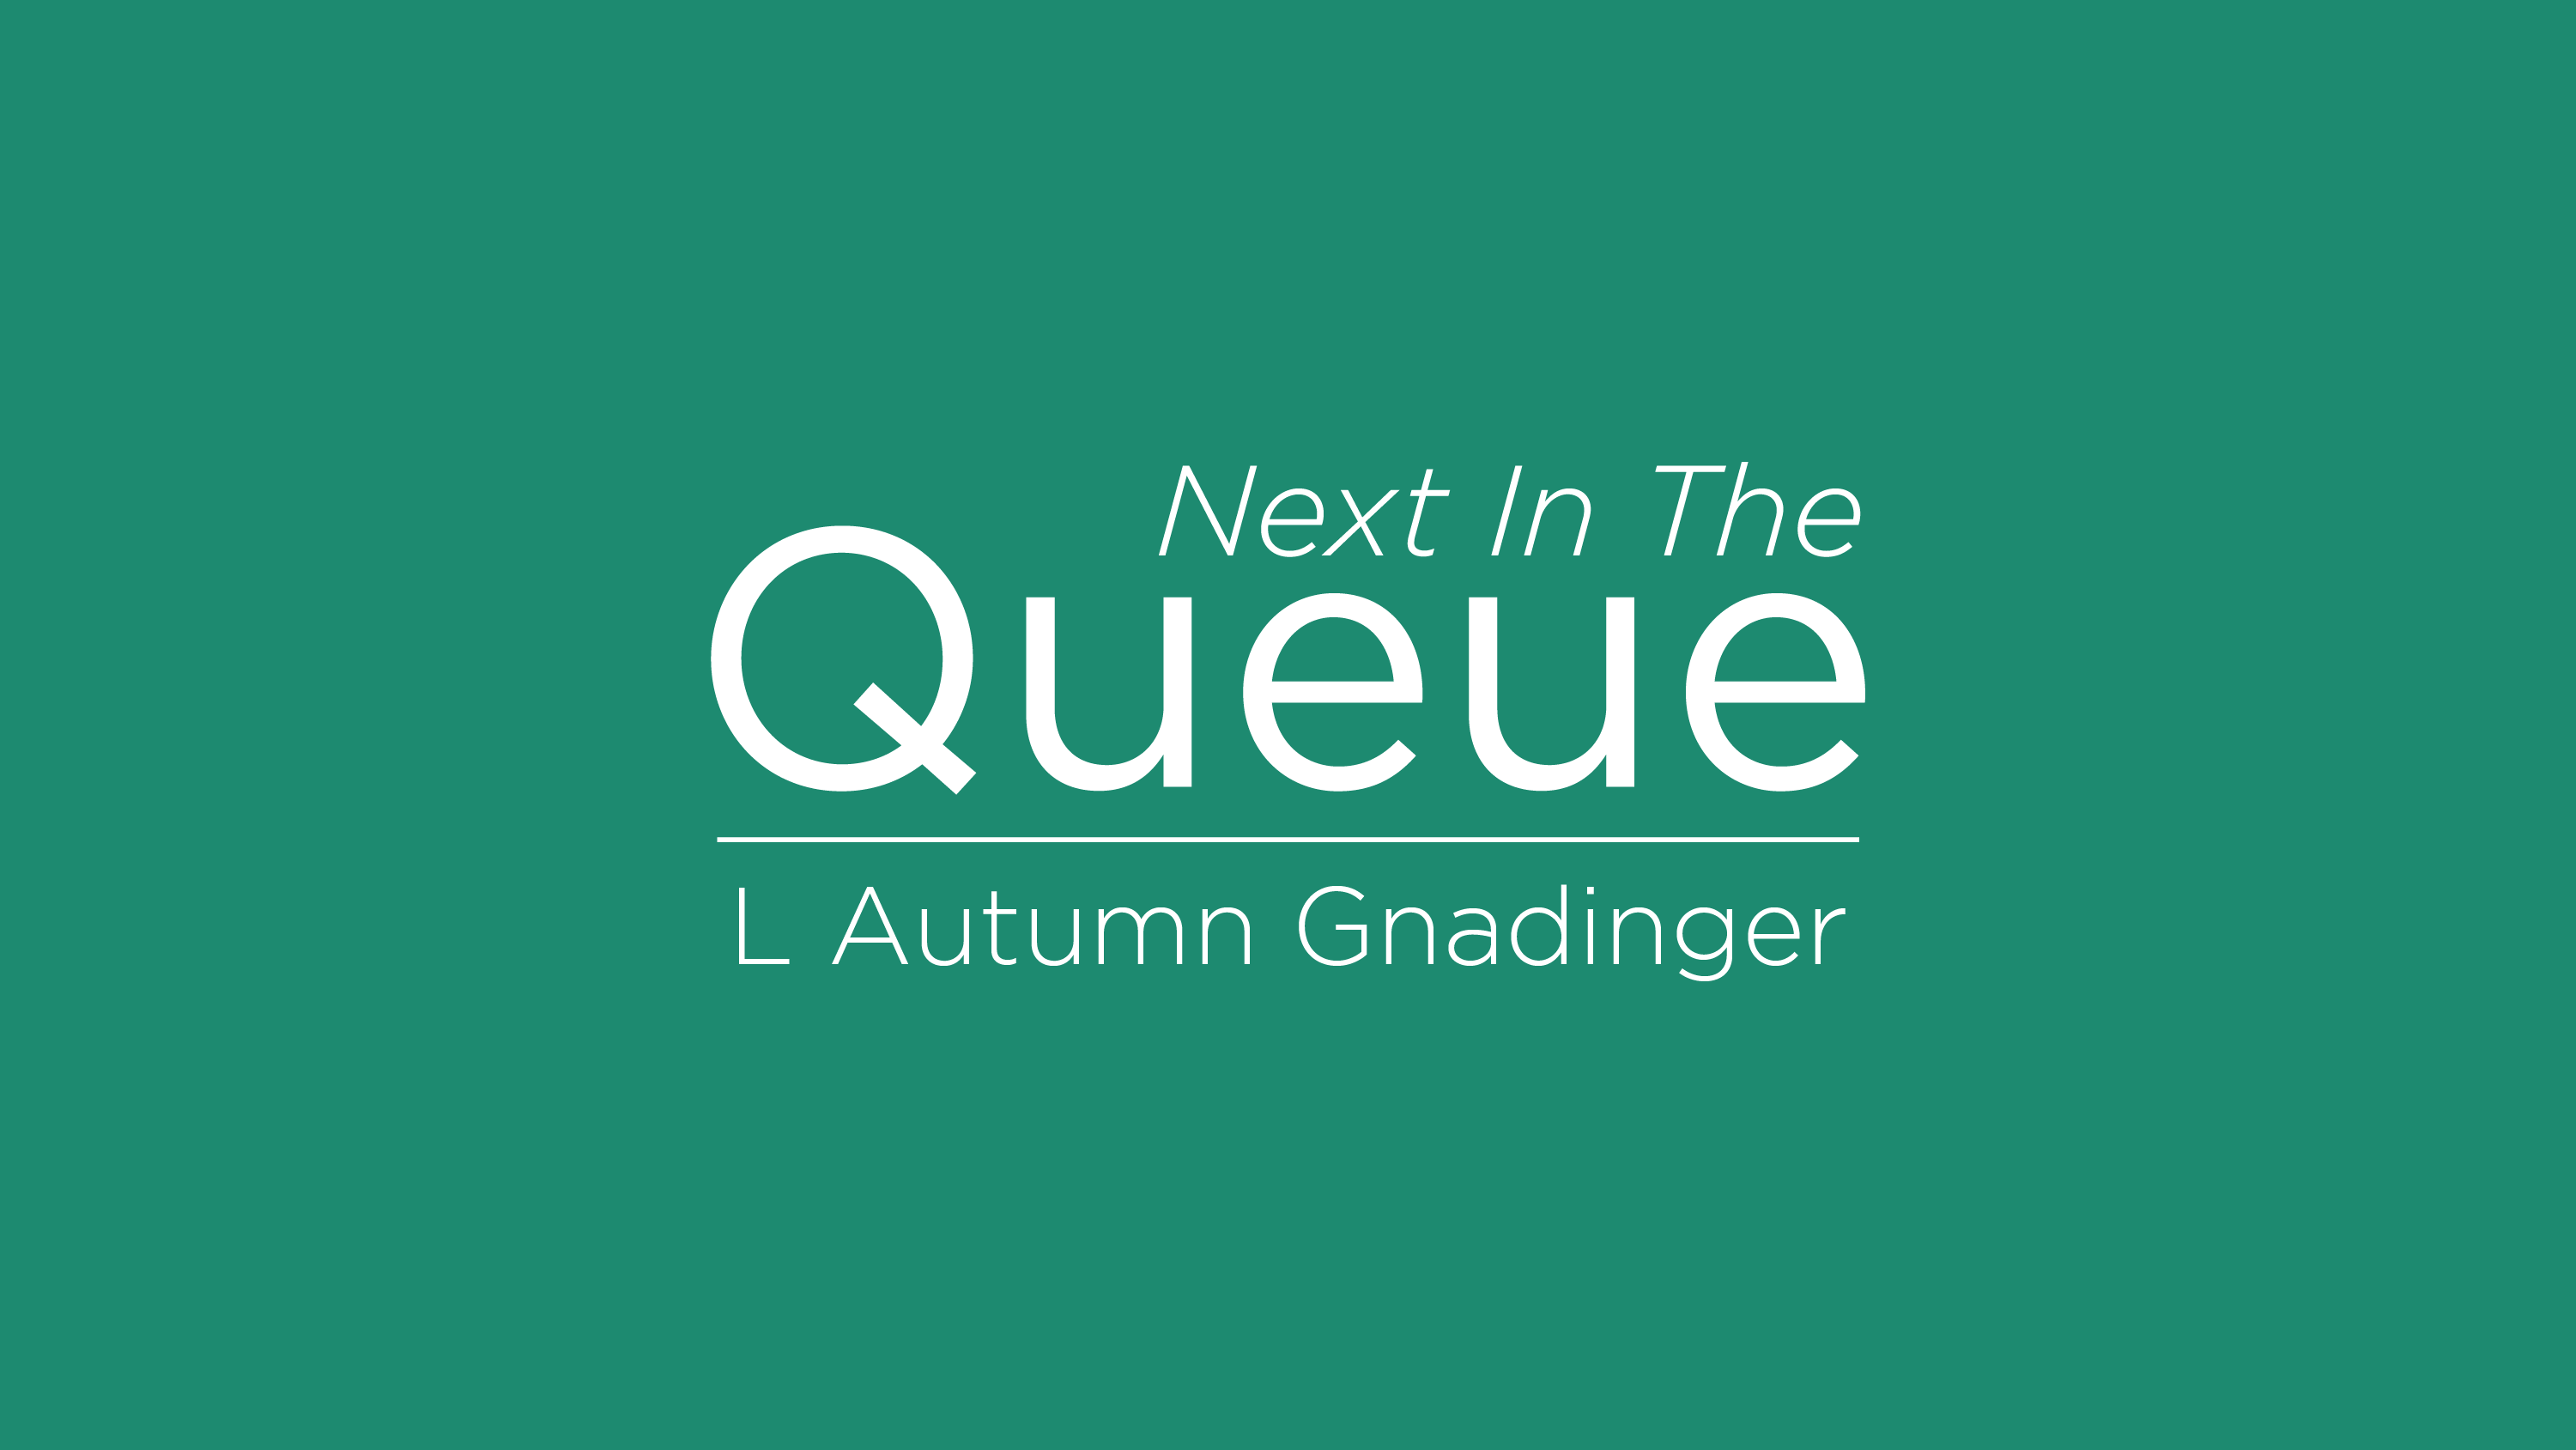 Blog post cover graphic for The Queue L Autumn Gnadinger